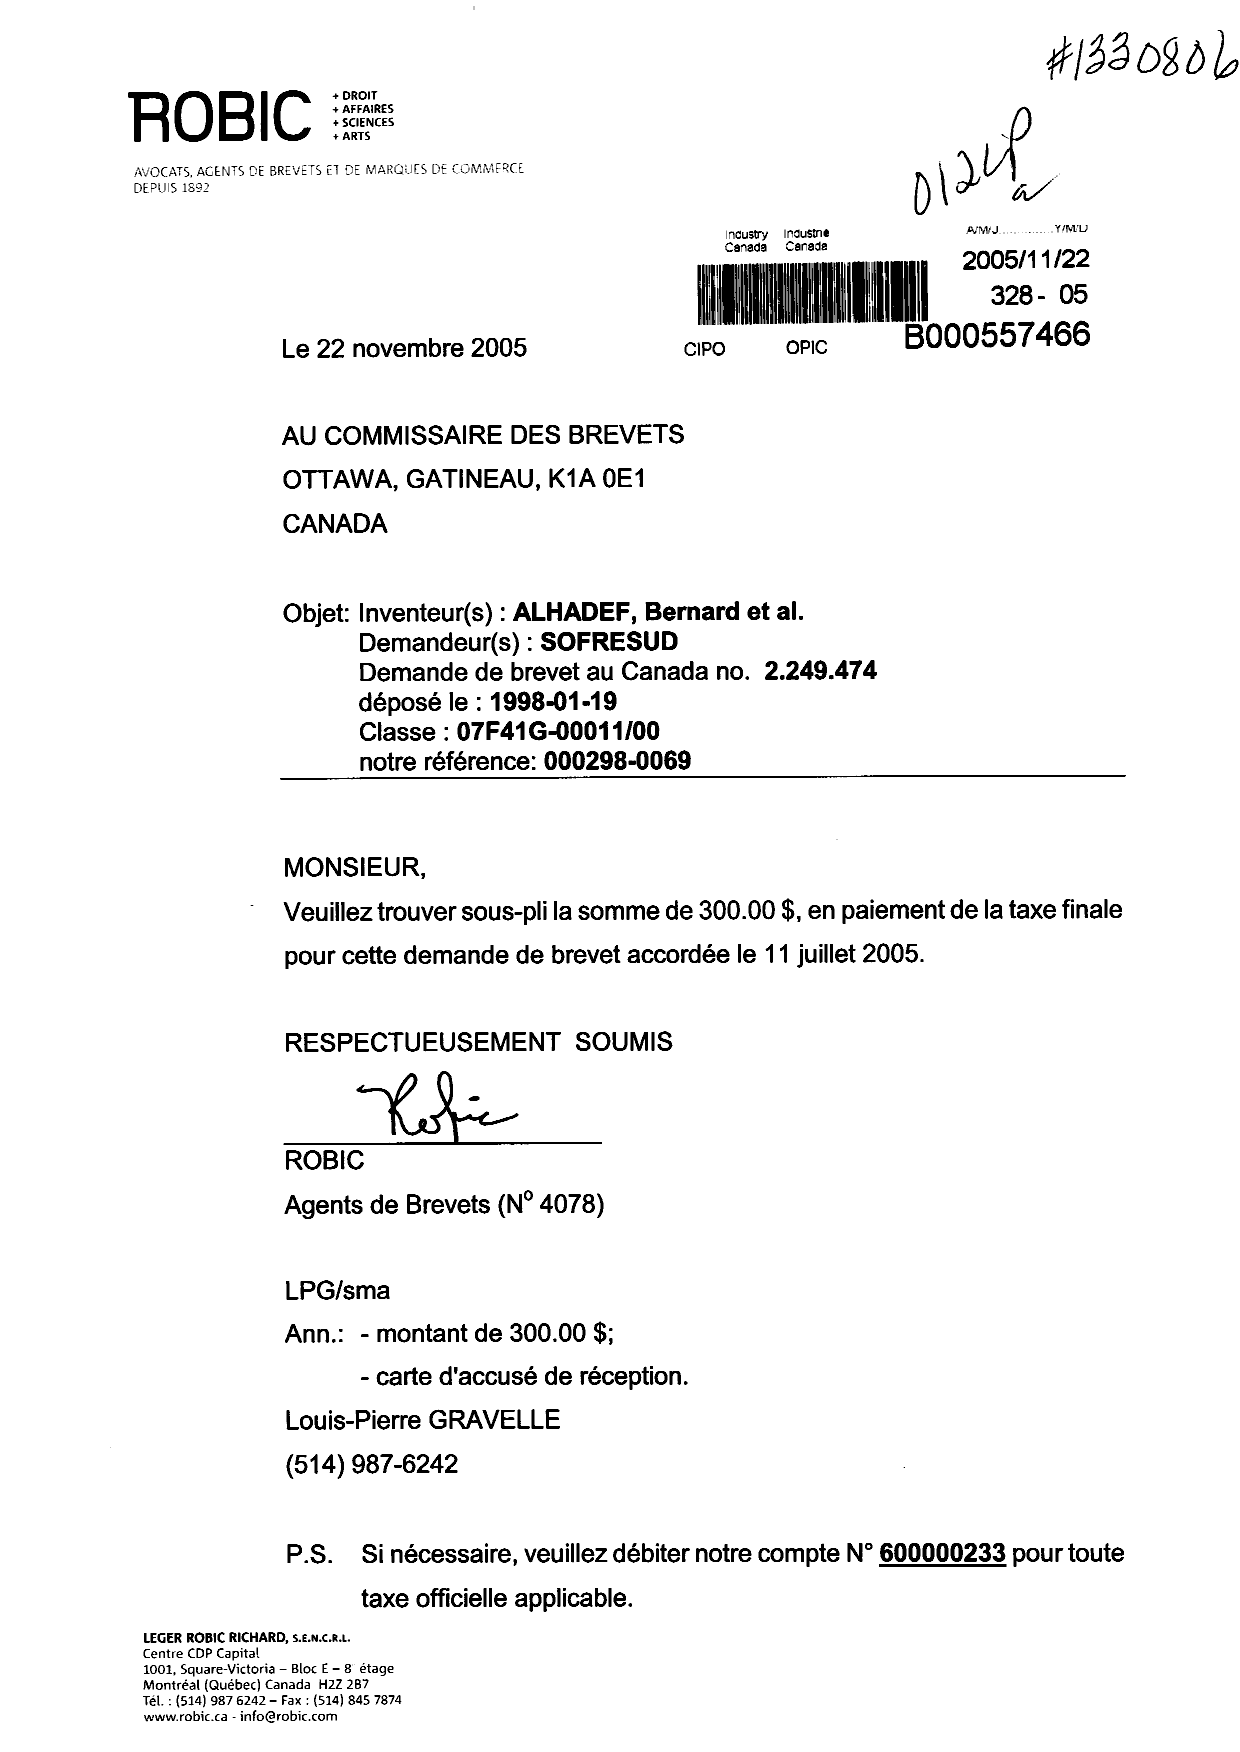 Canadian Patent Document 2249474. Correspondence 20051122. Image 1 of 1